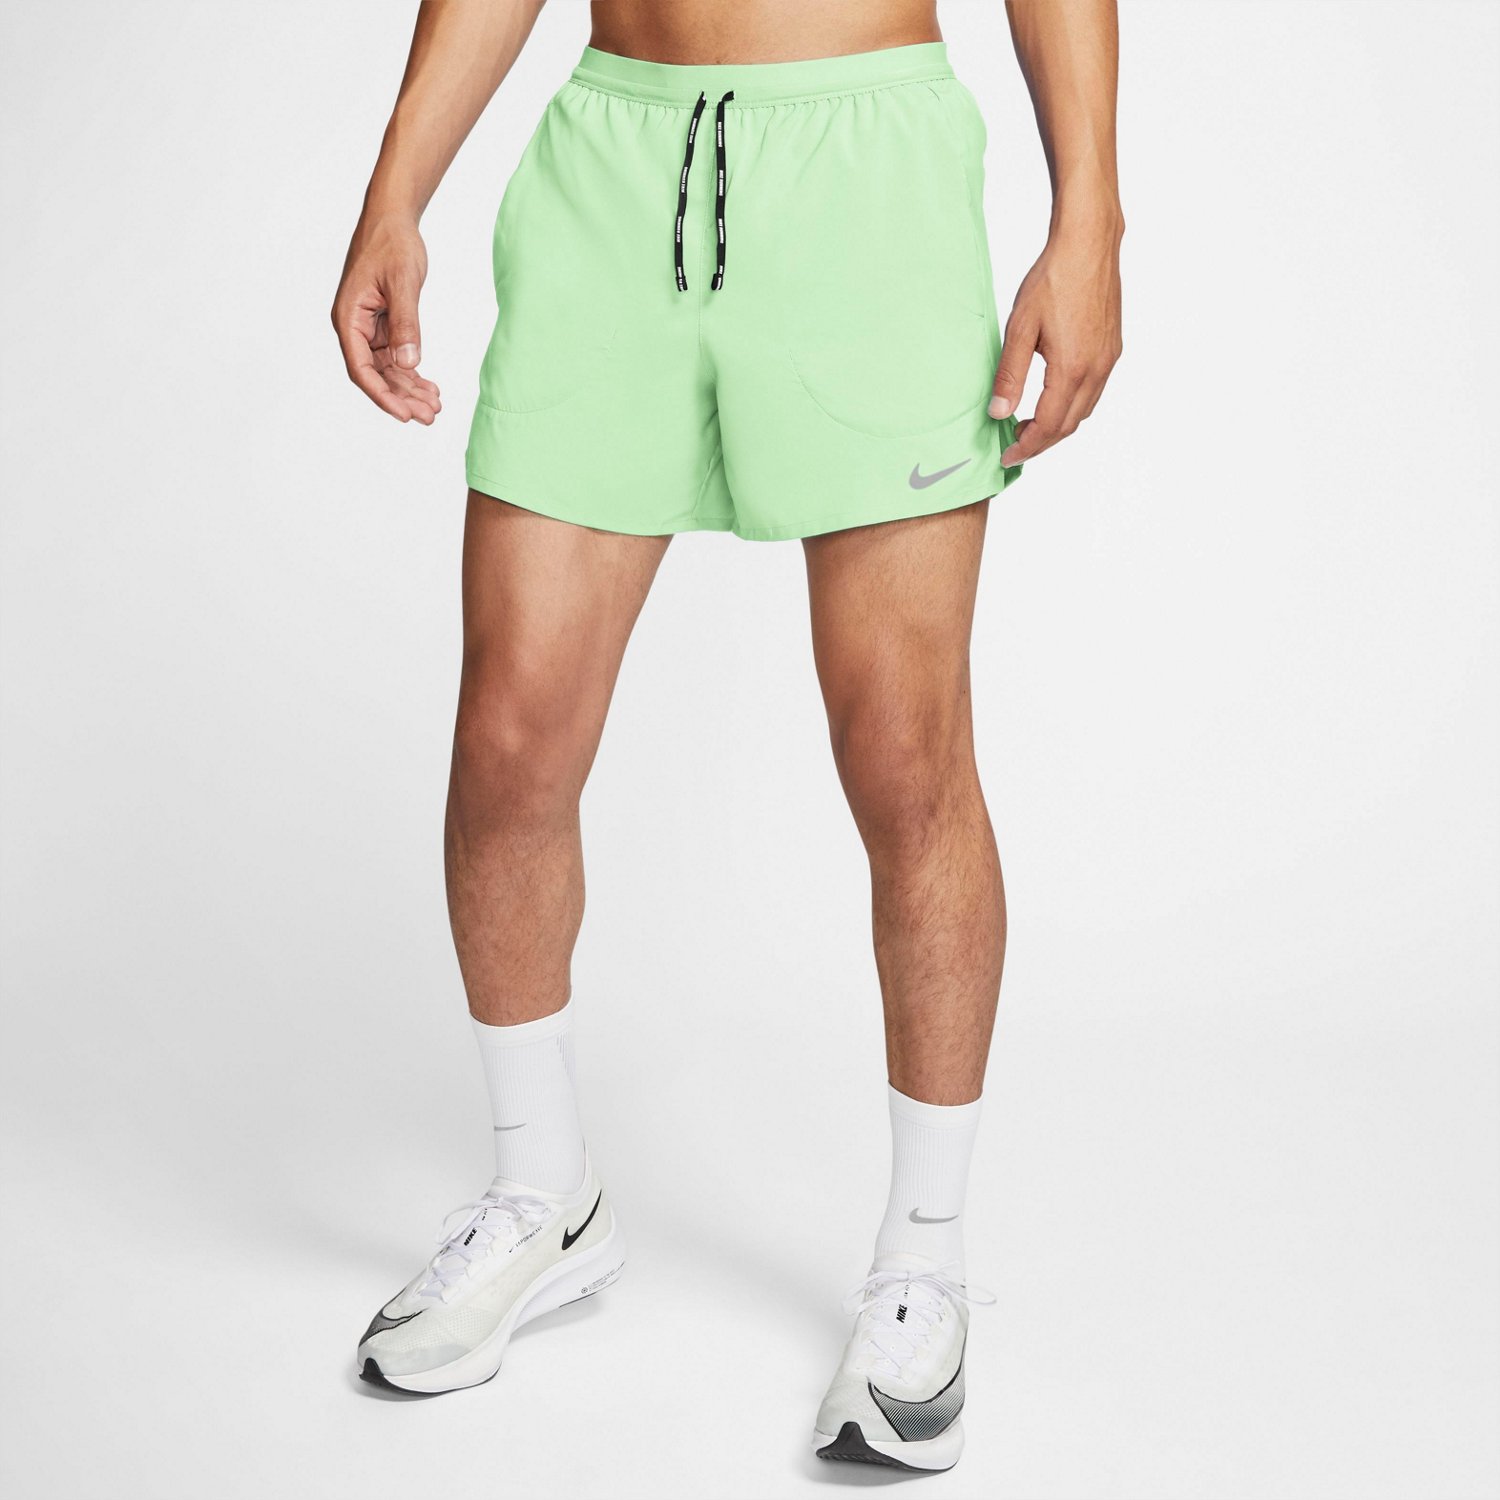 Nike Men's Flex Stride Shorts 5 in 